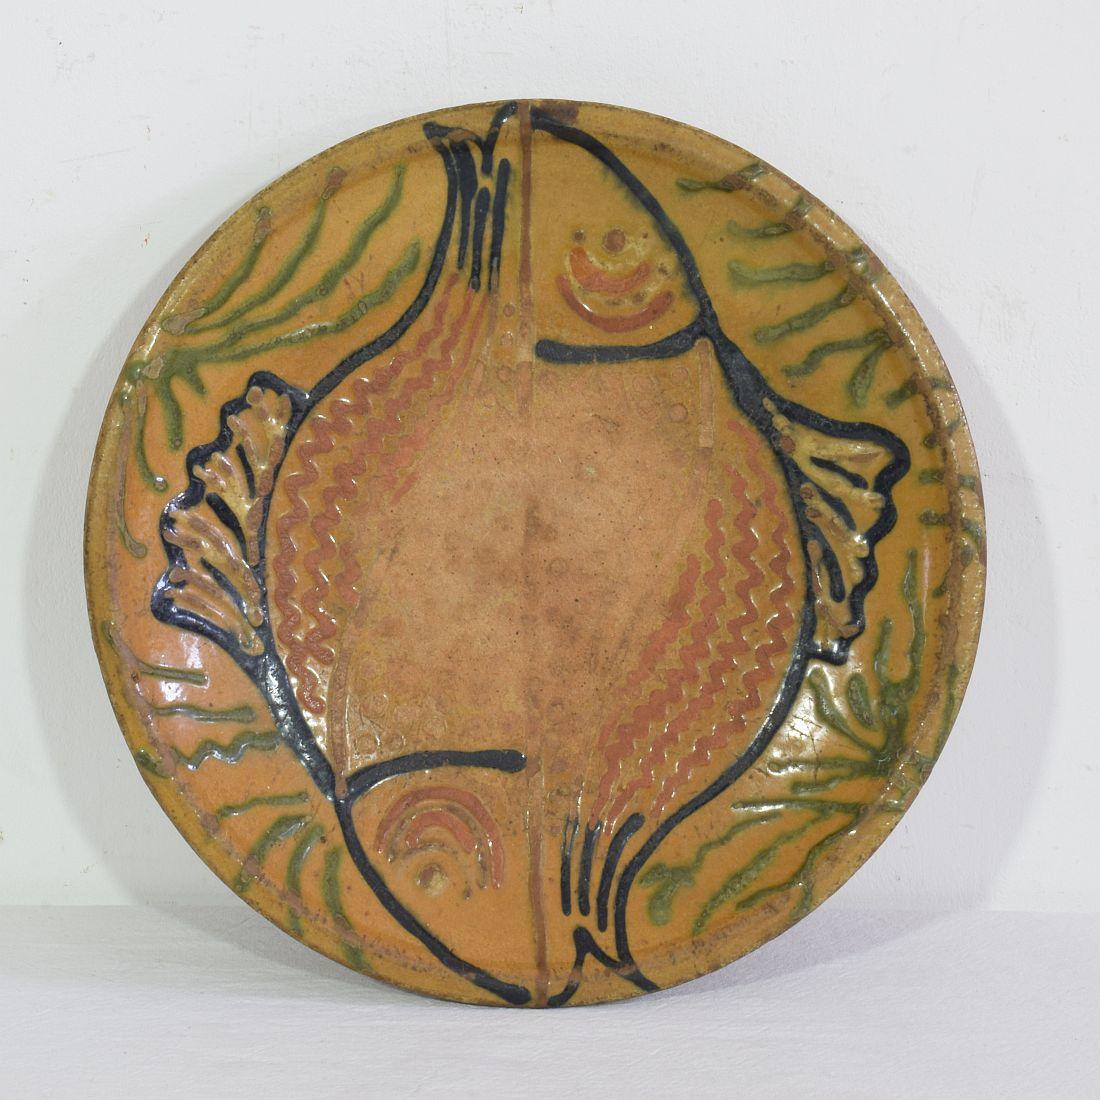 Wonderful glazed  ceramic platter/ bowl depicting two fish. Great piece of folk art.
France circa 1850-1900. Weathered